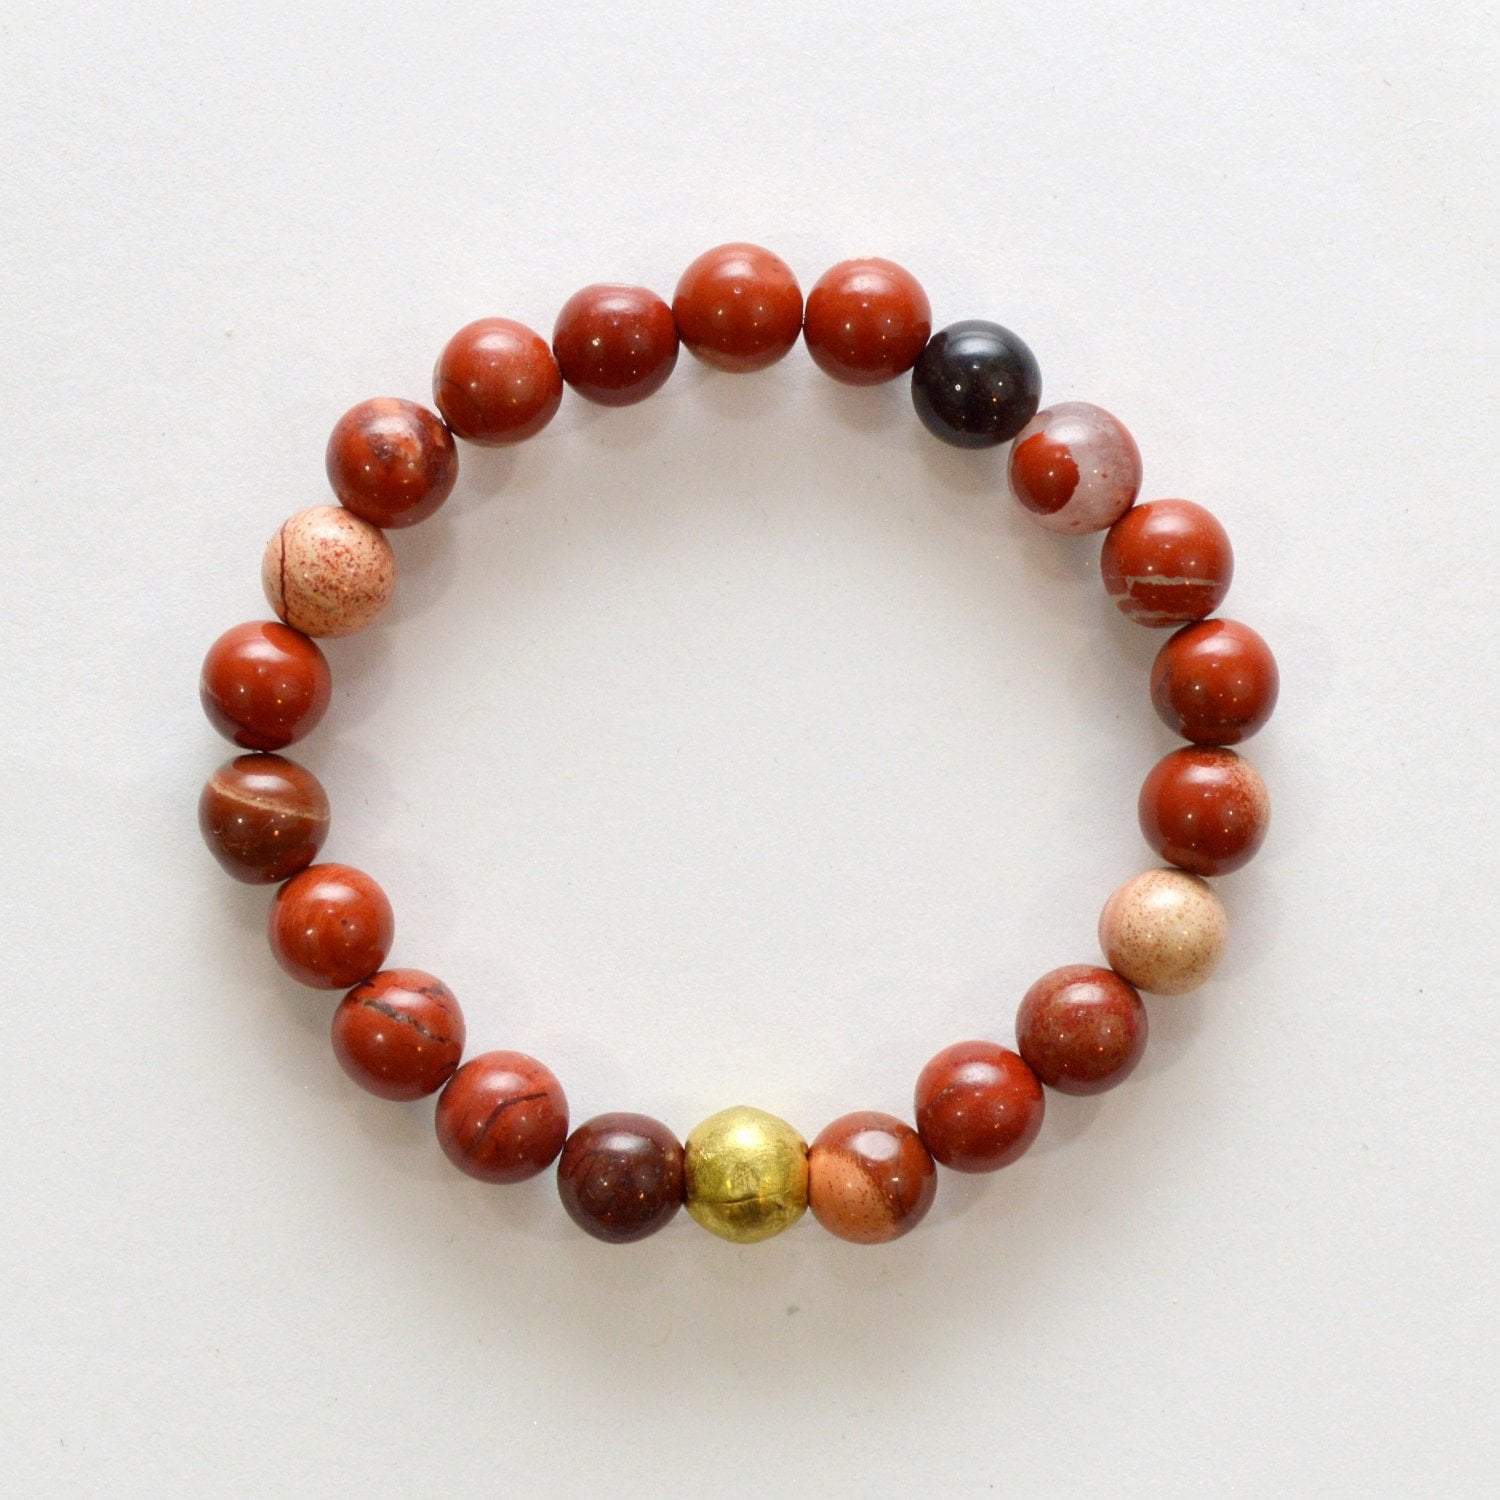 1 Red Jasper Mini Palm Stone for Strength + Health #RJ36 – Bliss Crystals